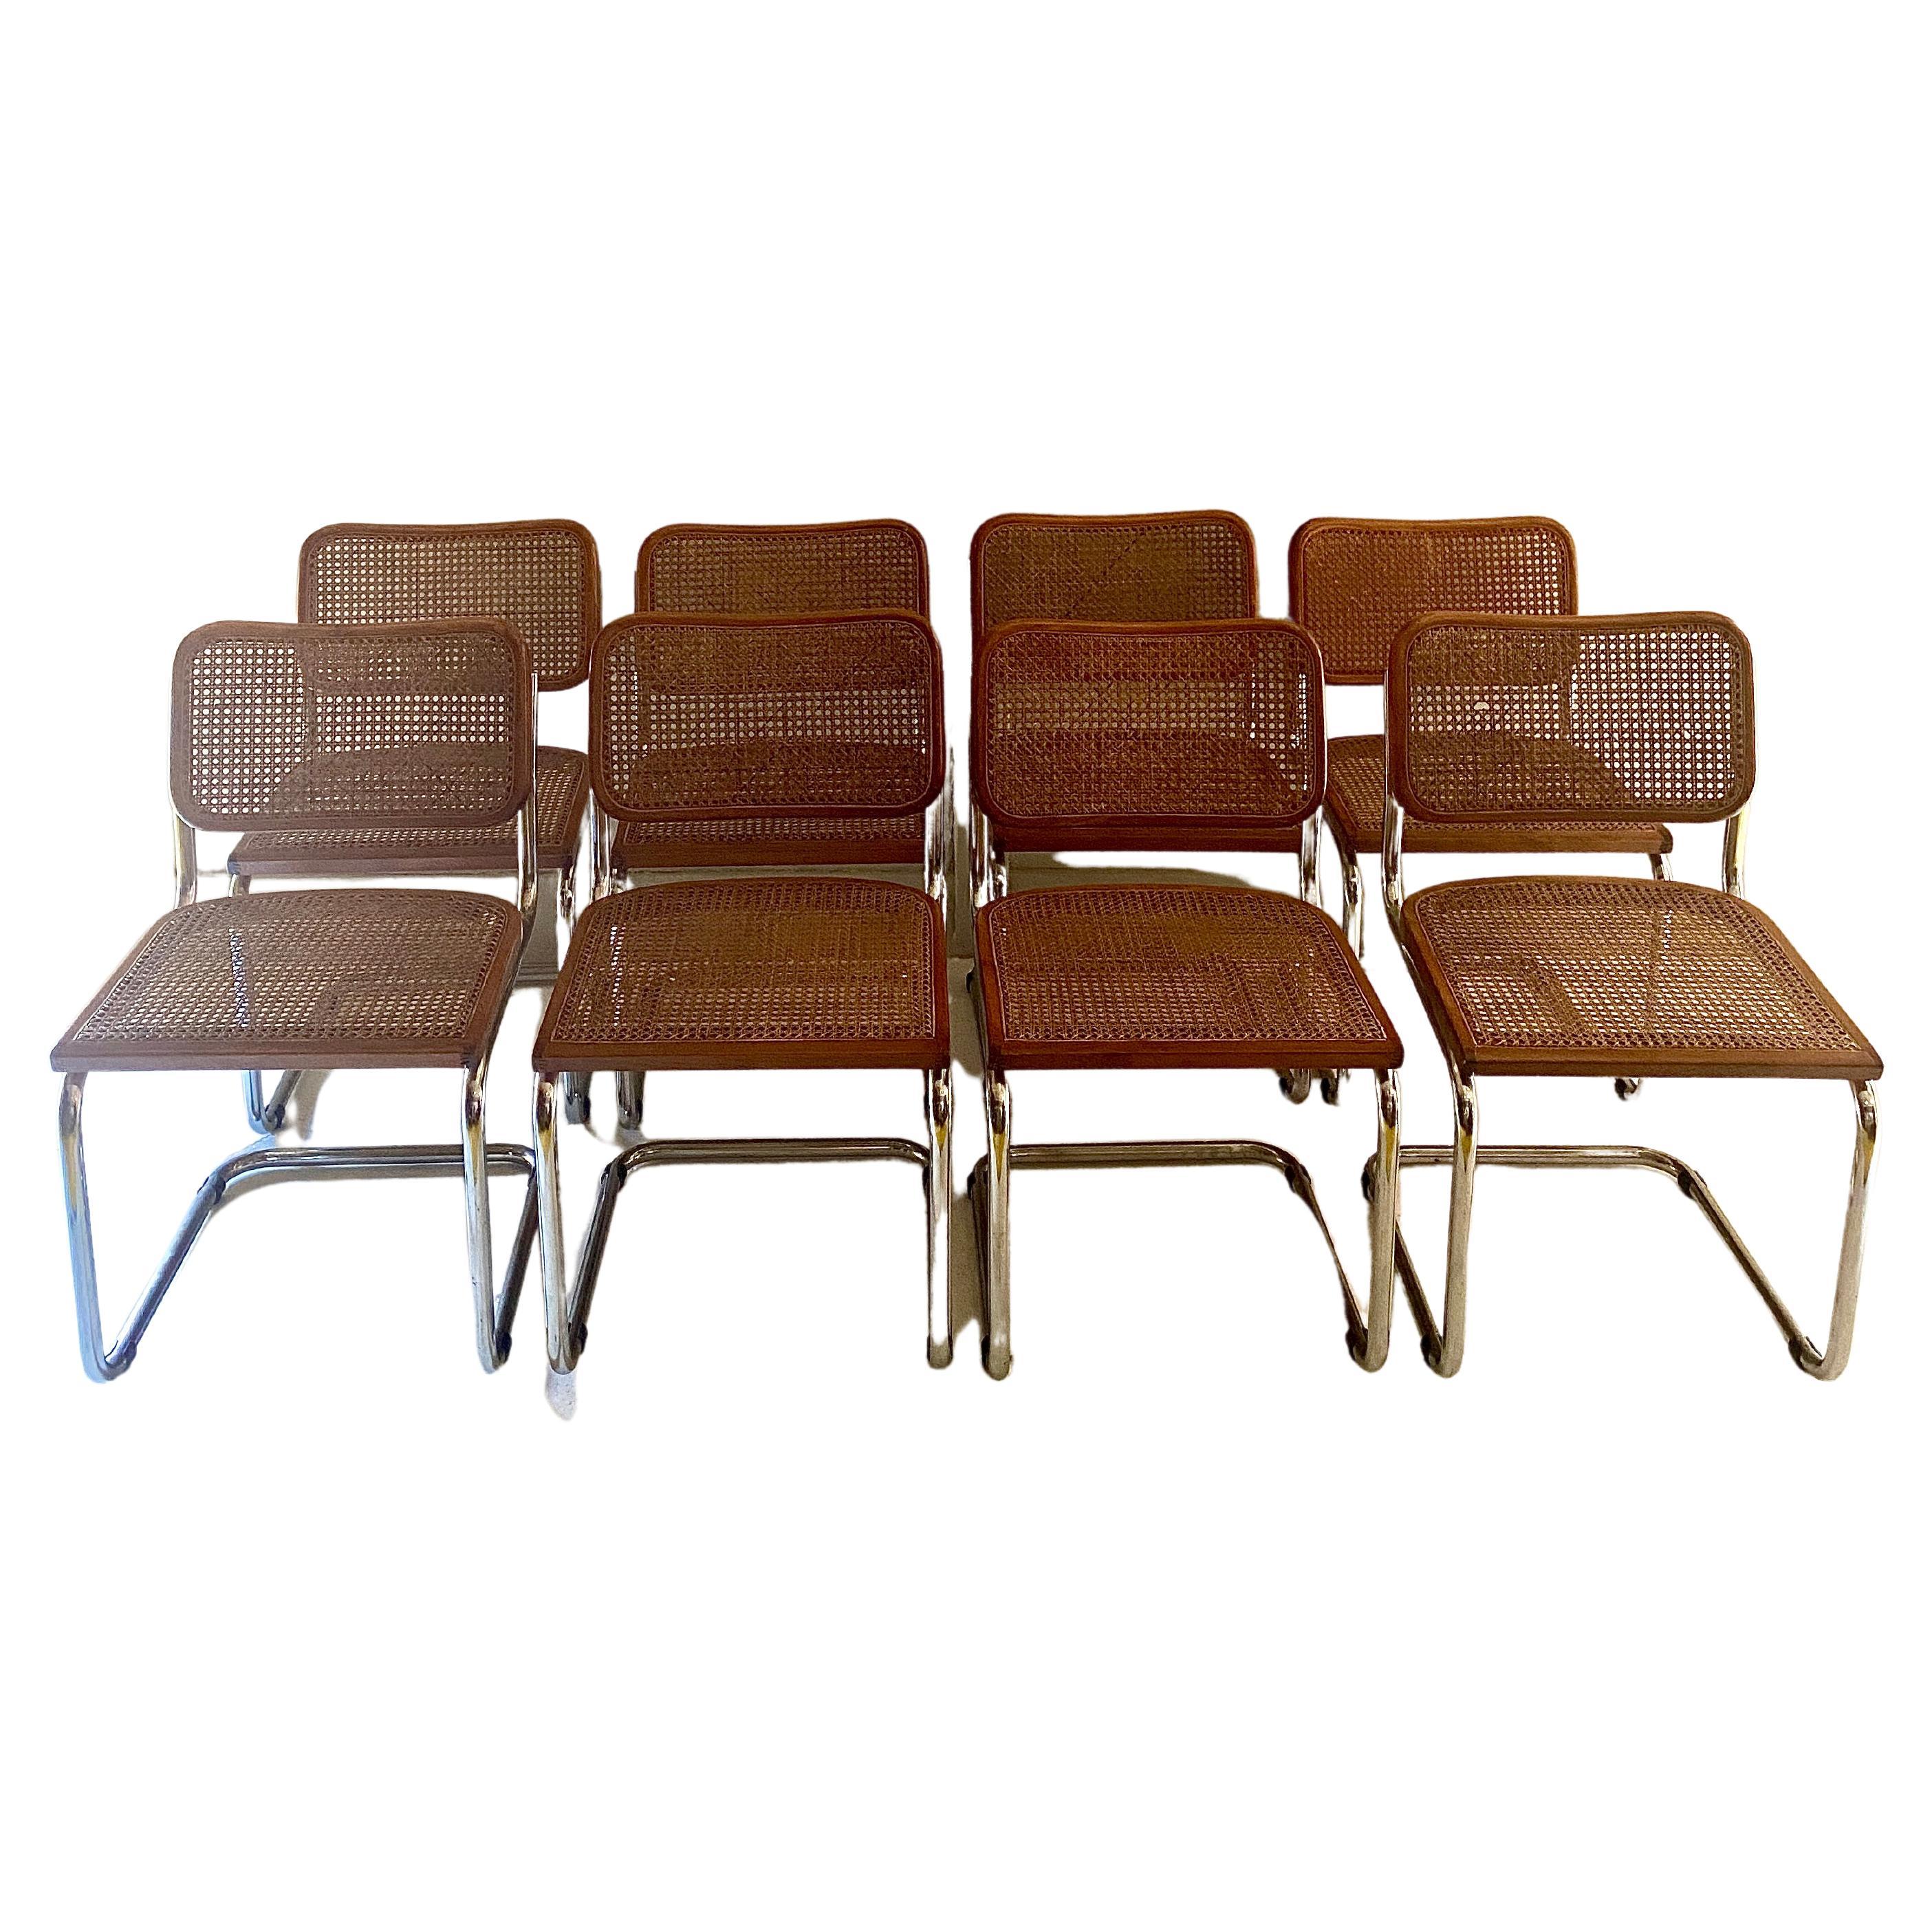 Marcel Breuer Cesca Chairs, Set of 8